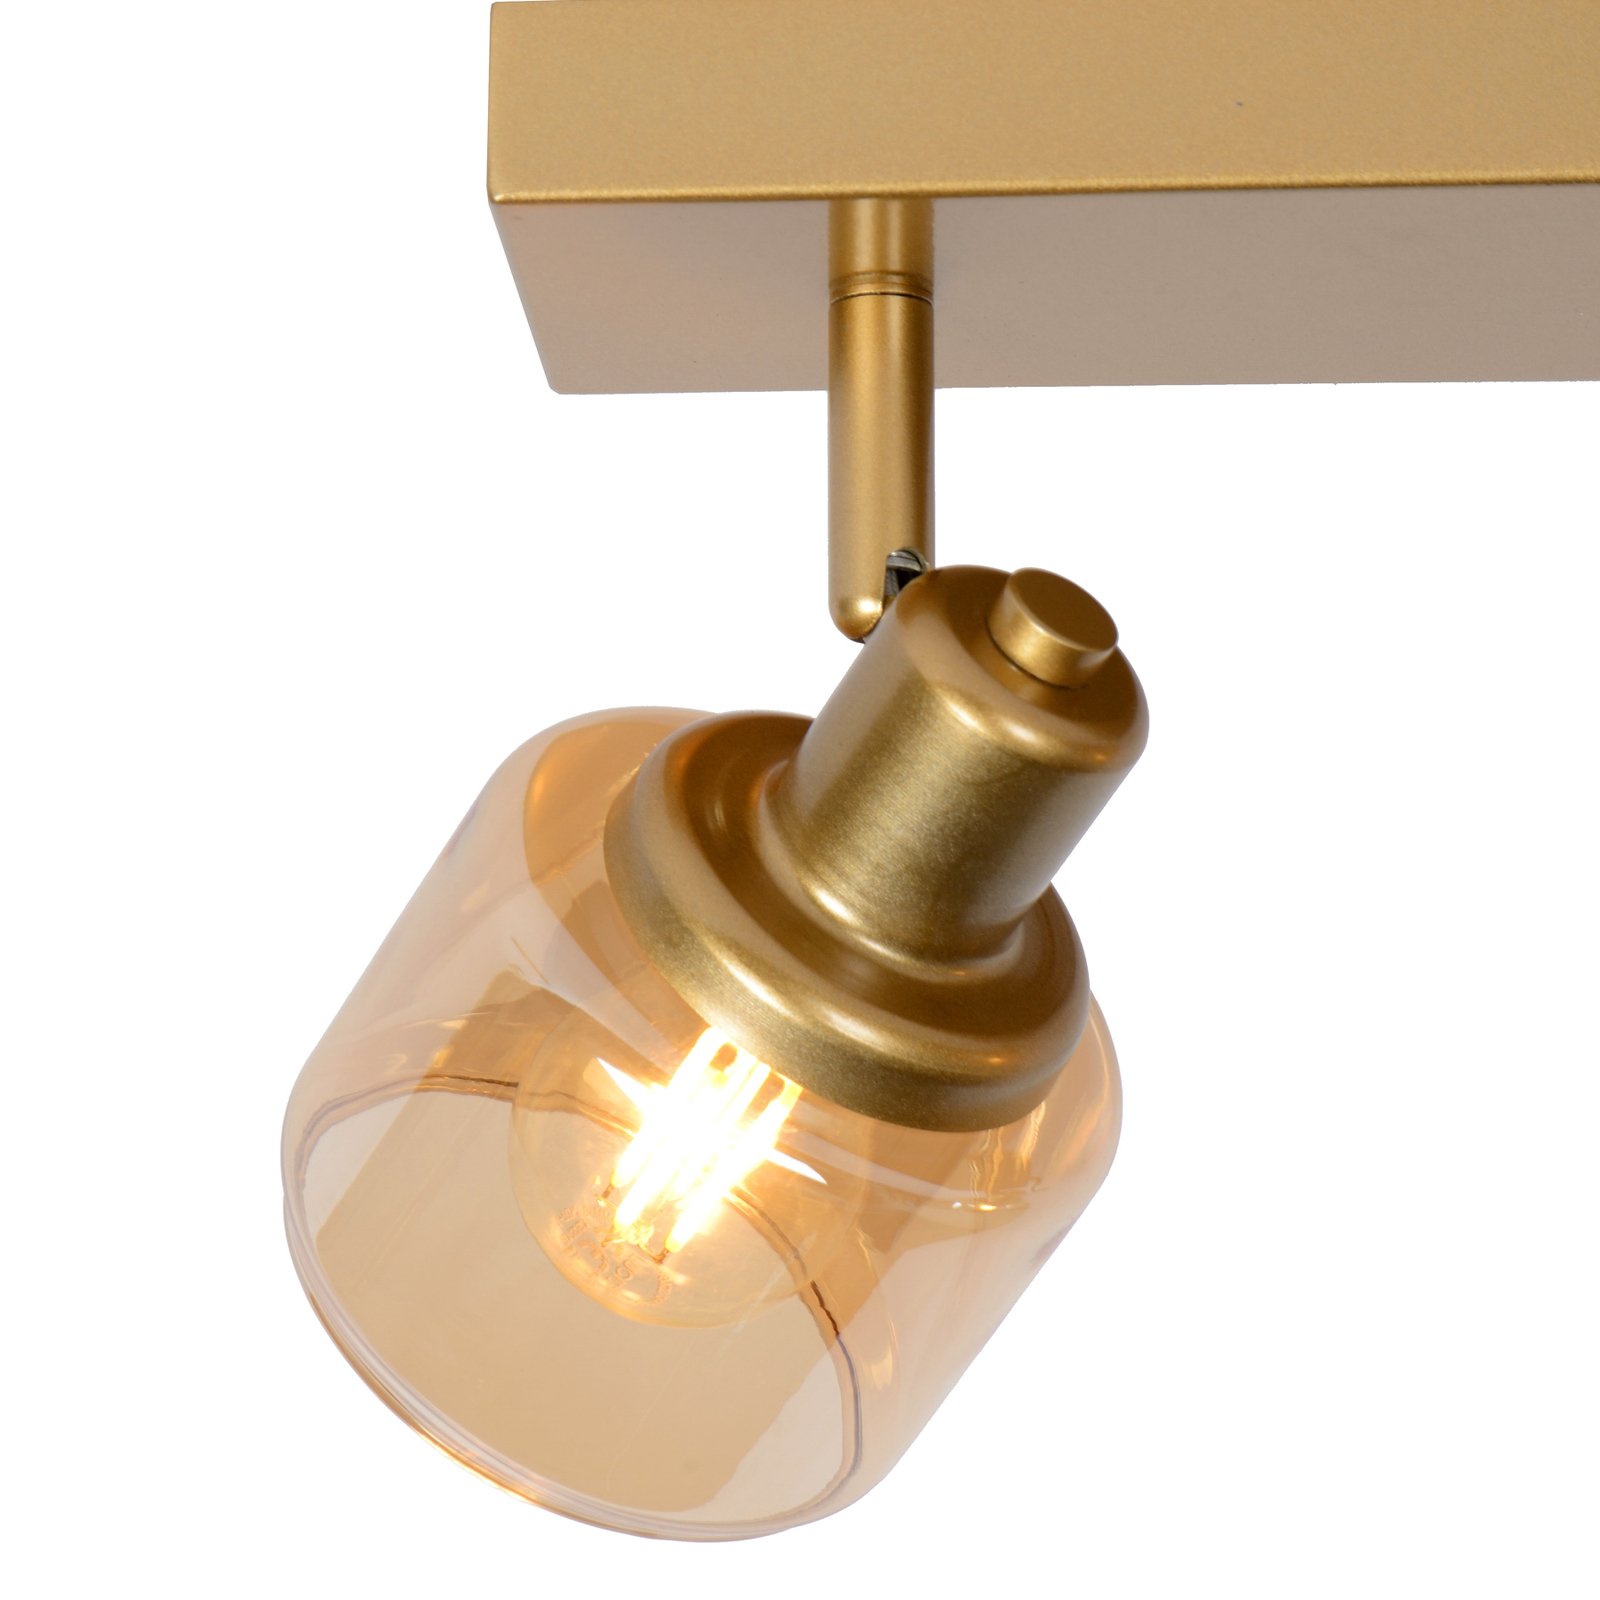 Bjorn downlight, 2-bulb, gold/brass